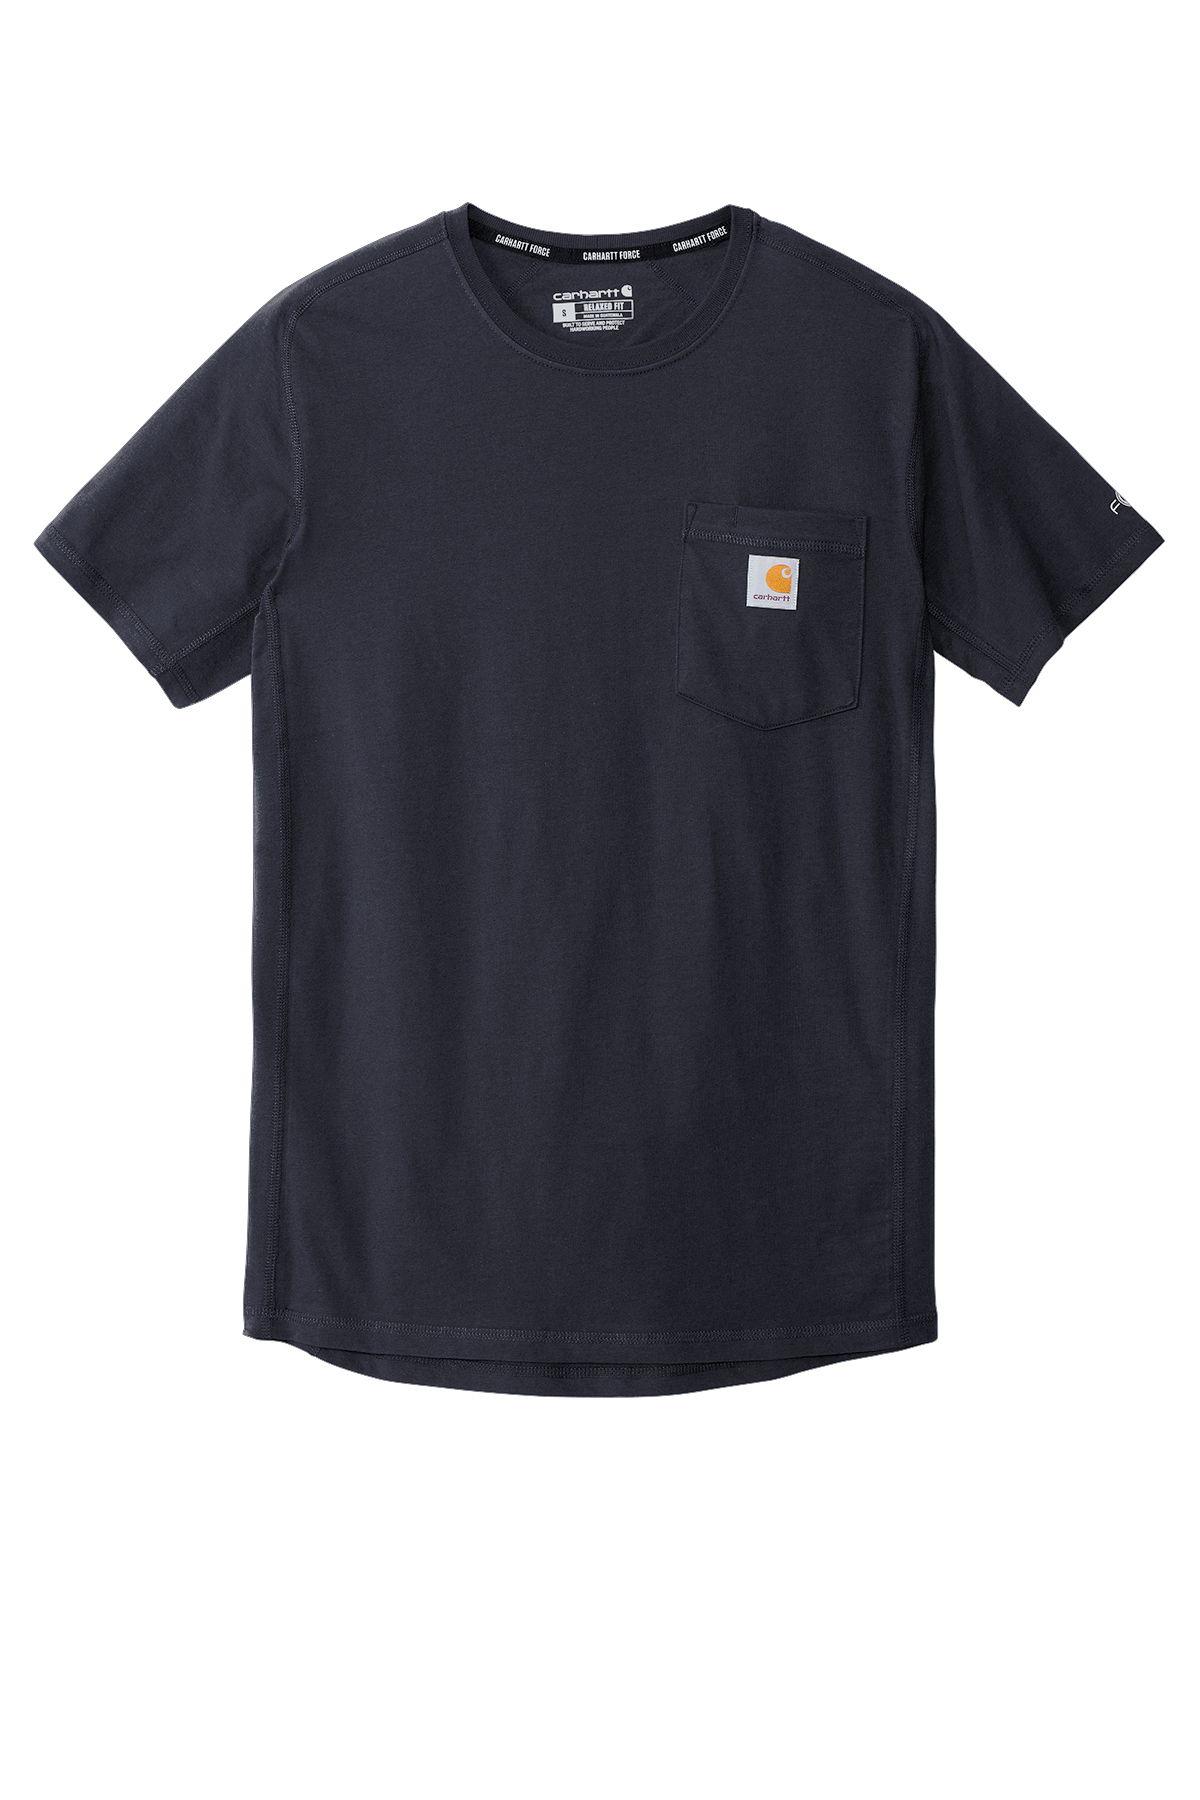 Carhartt Force Short Sleeve Pocket T-Shirt | Product | SanMar